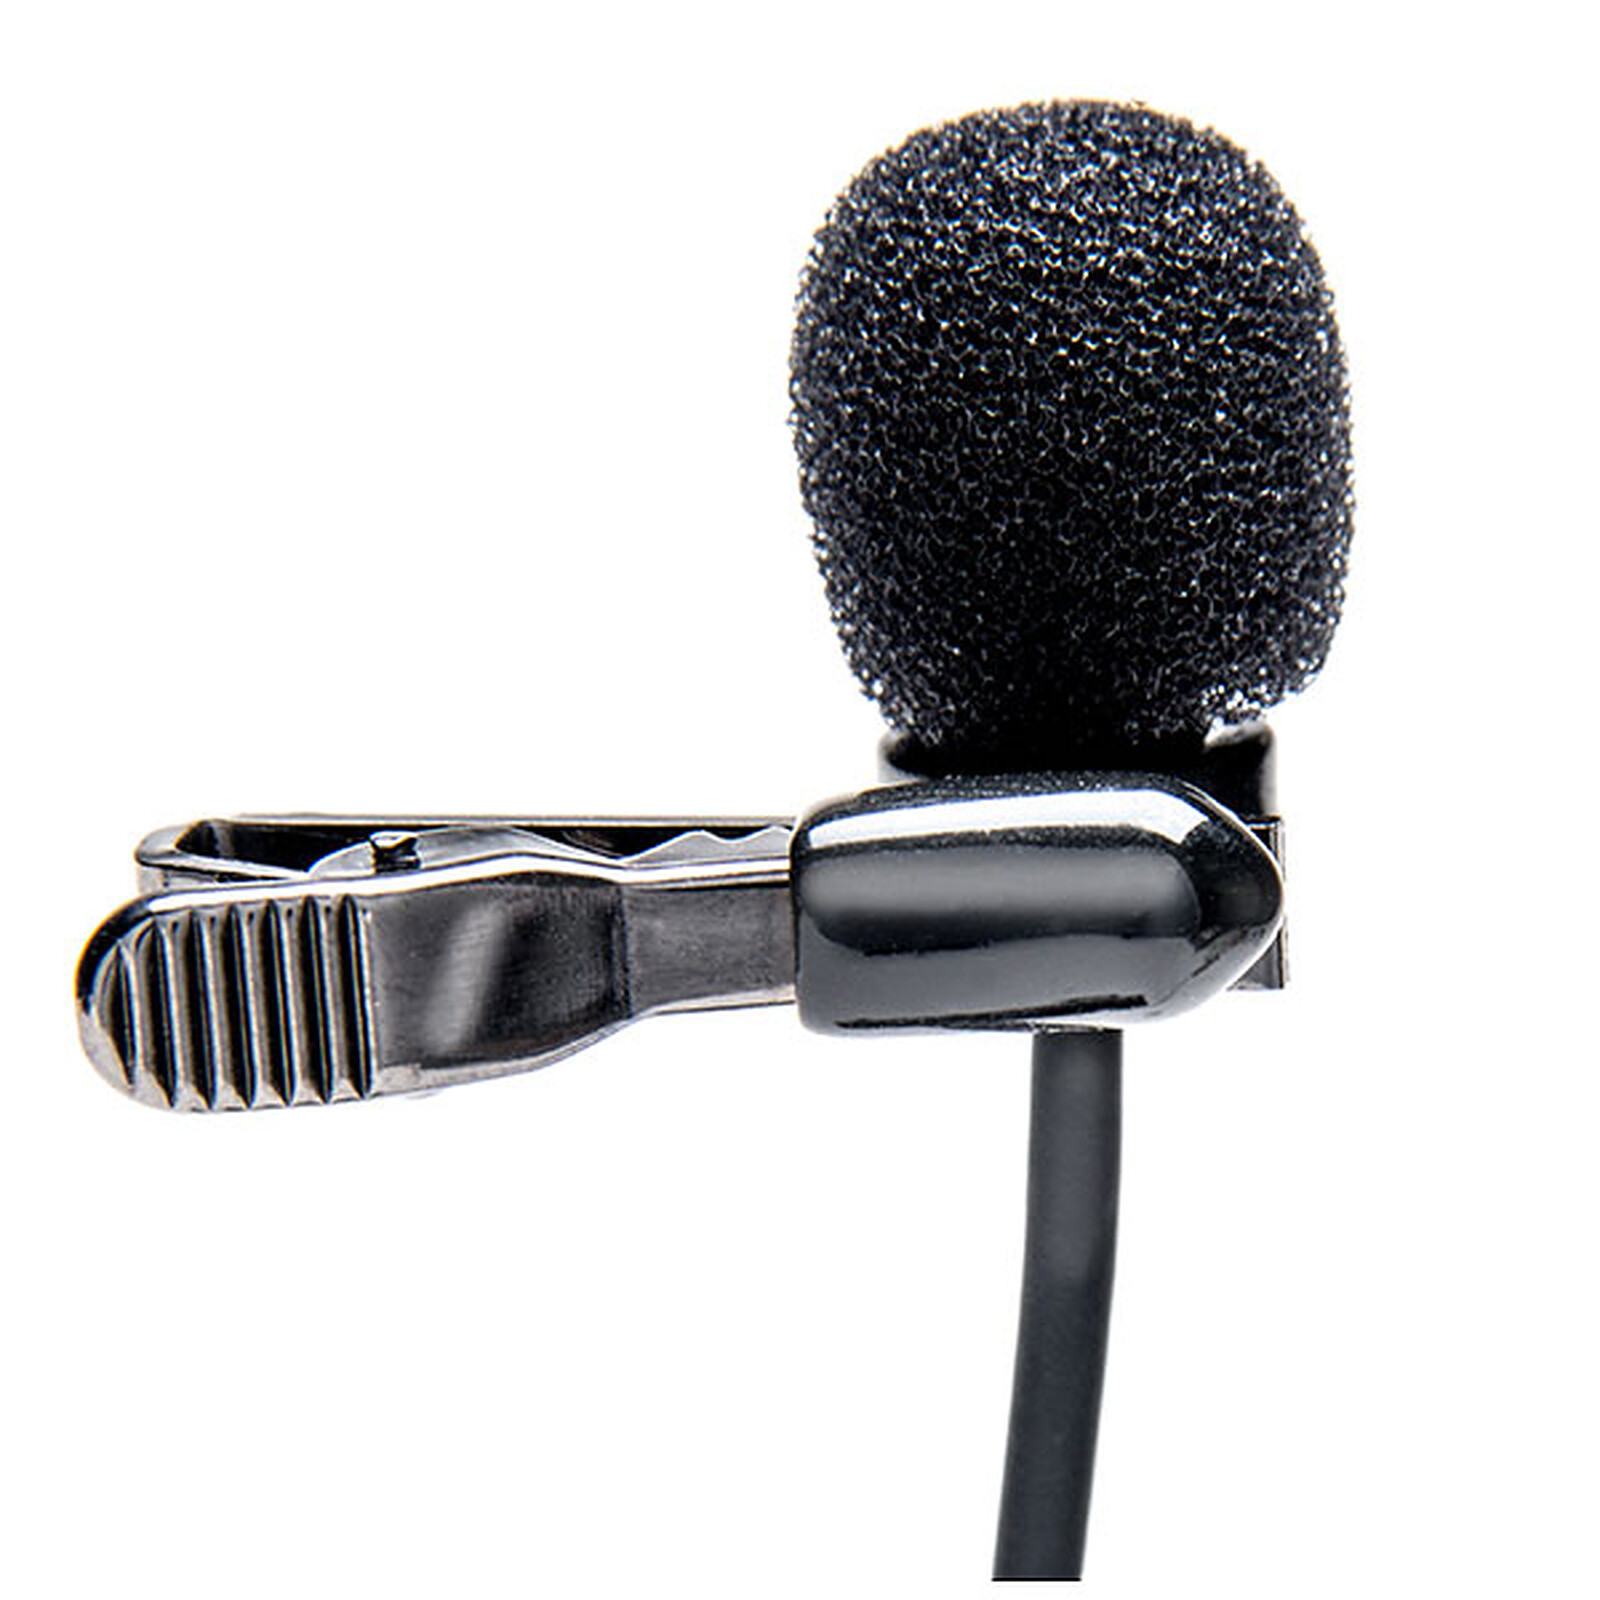 Philips LFH9173 - Microphone - Garantie 3 ans LDLC